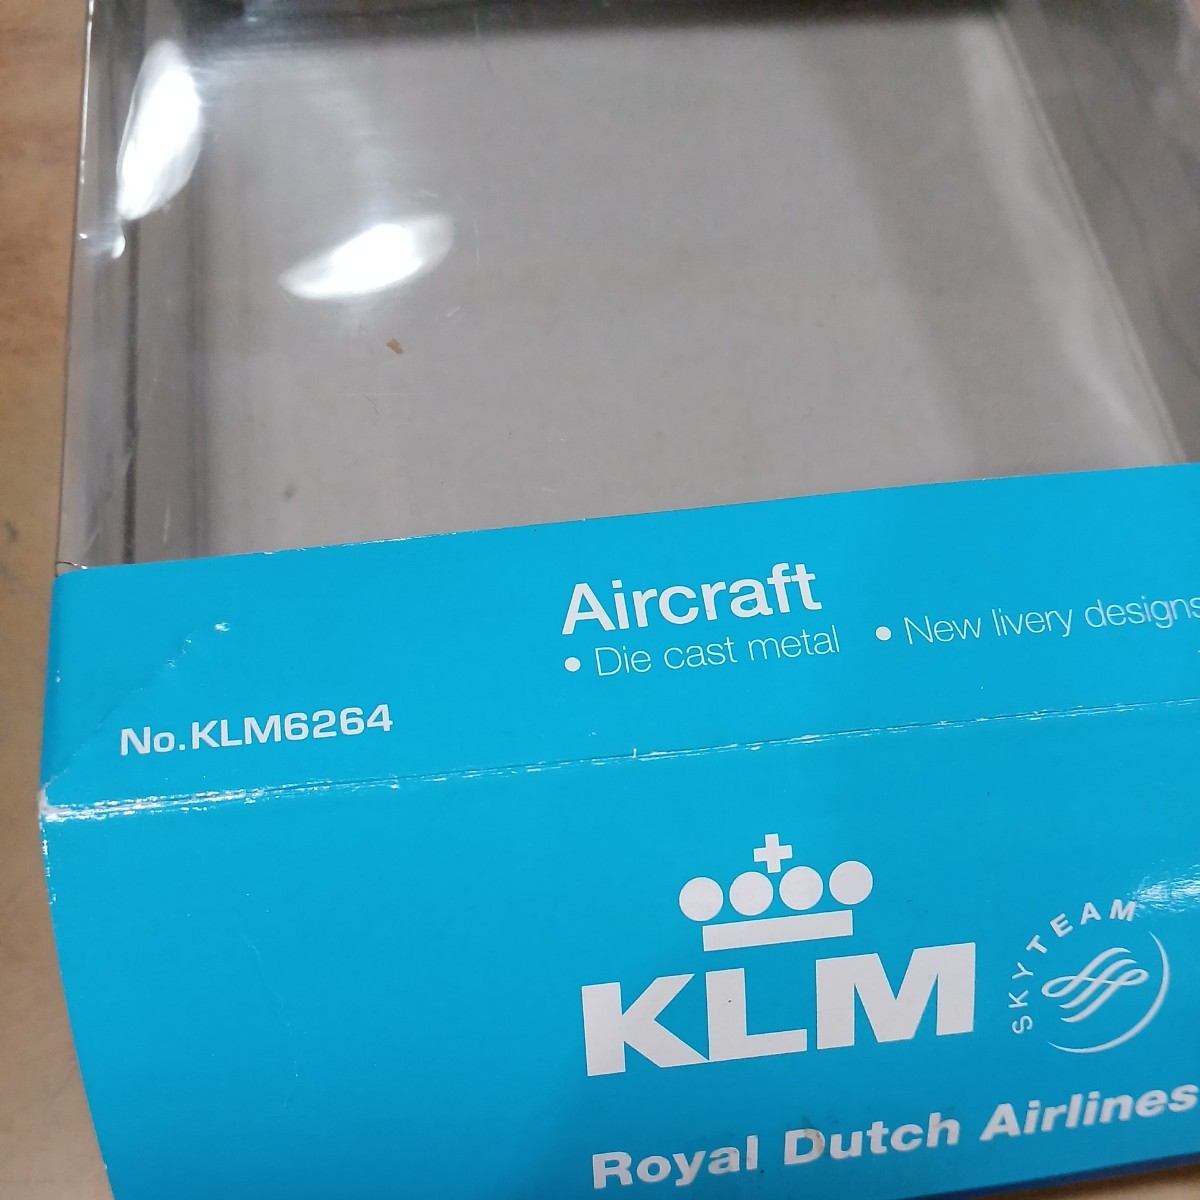 KLM KLM6264 ボーイング?747-400? Royal Dutch Airlin 航空機 飛行機 おもちゃ 詳細不明 中古 長期保管_画像8